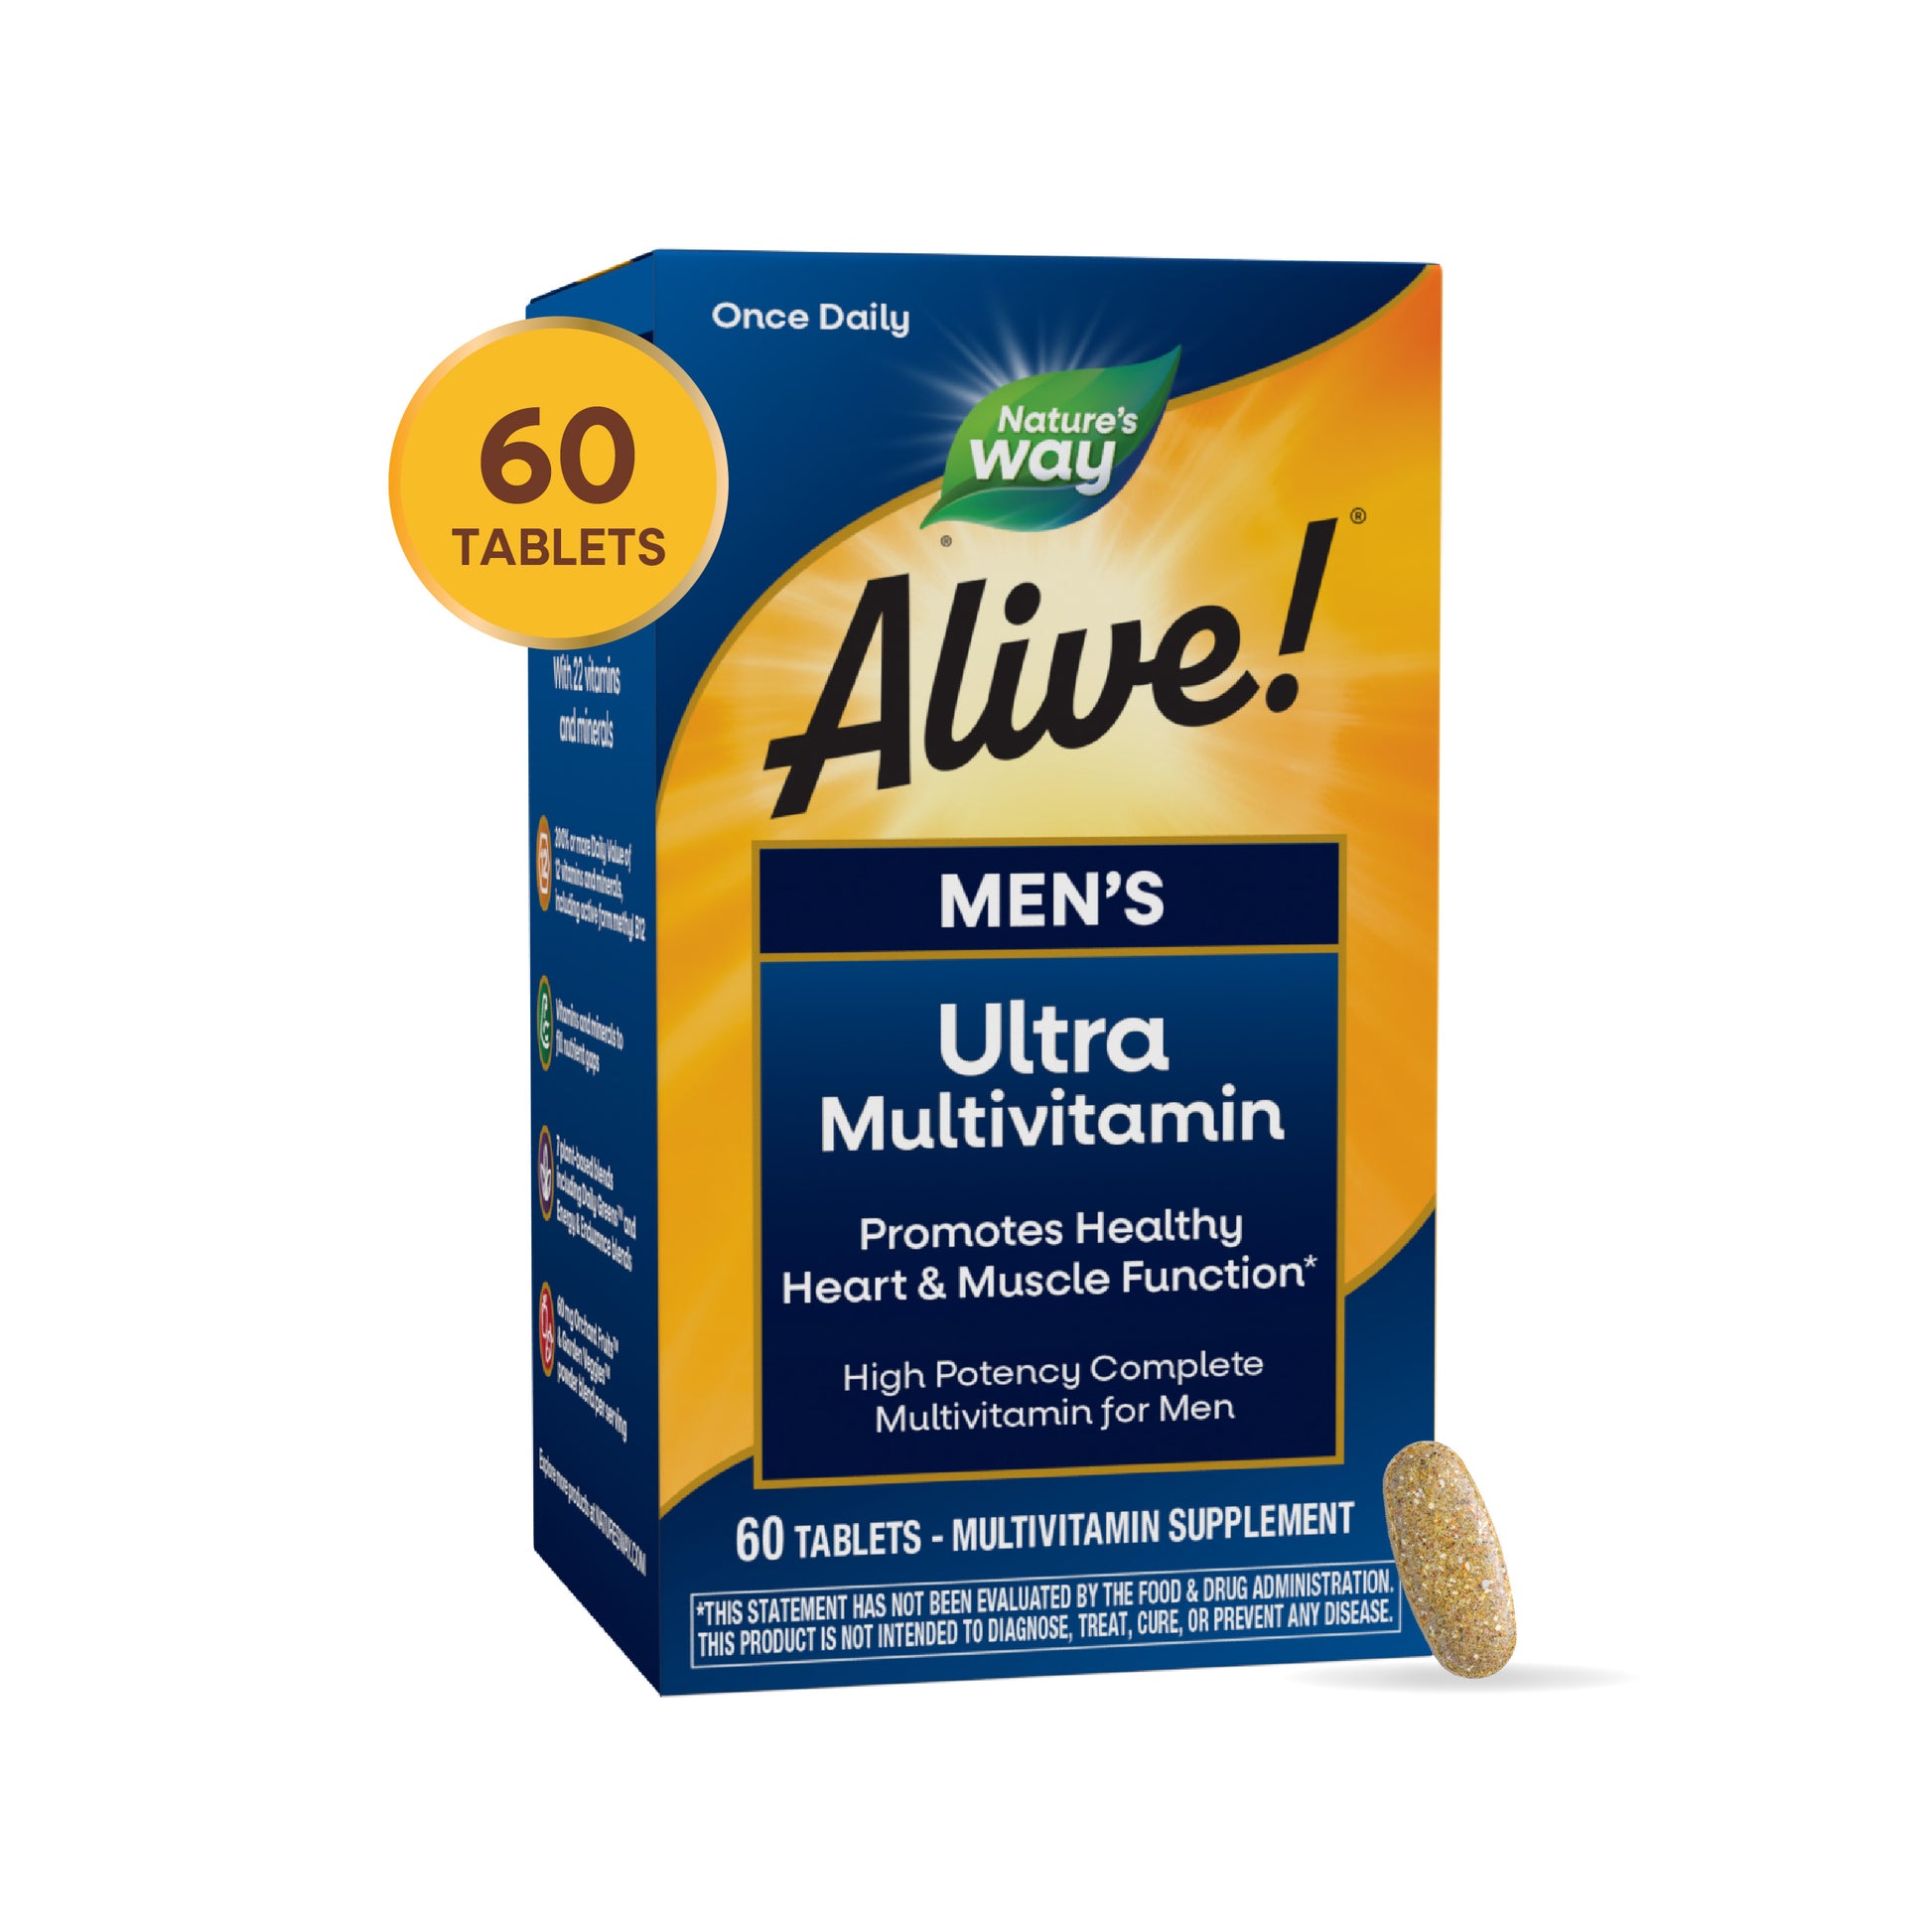 Nature's Way® | Alive!® Men’s Ultra Multivitamin